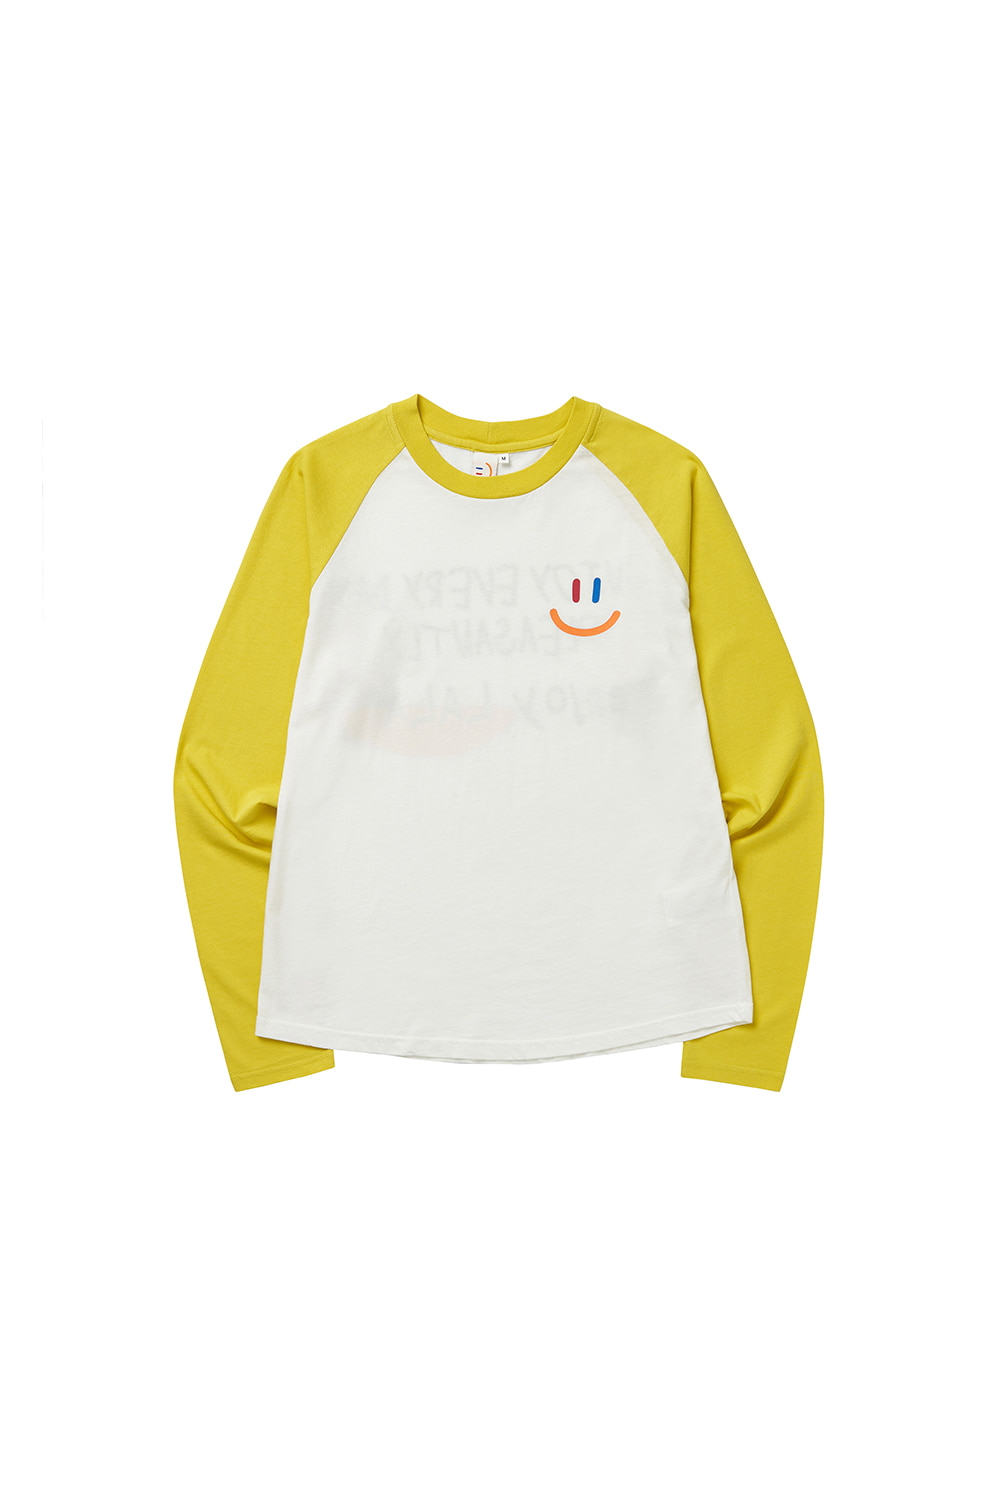 LaLa Raglan T-Shirt [Yellow]